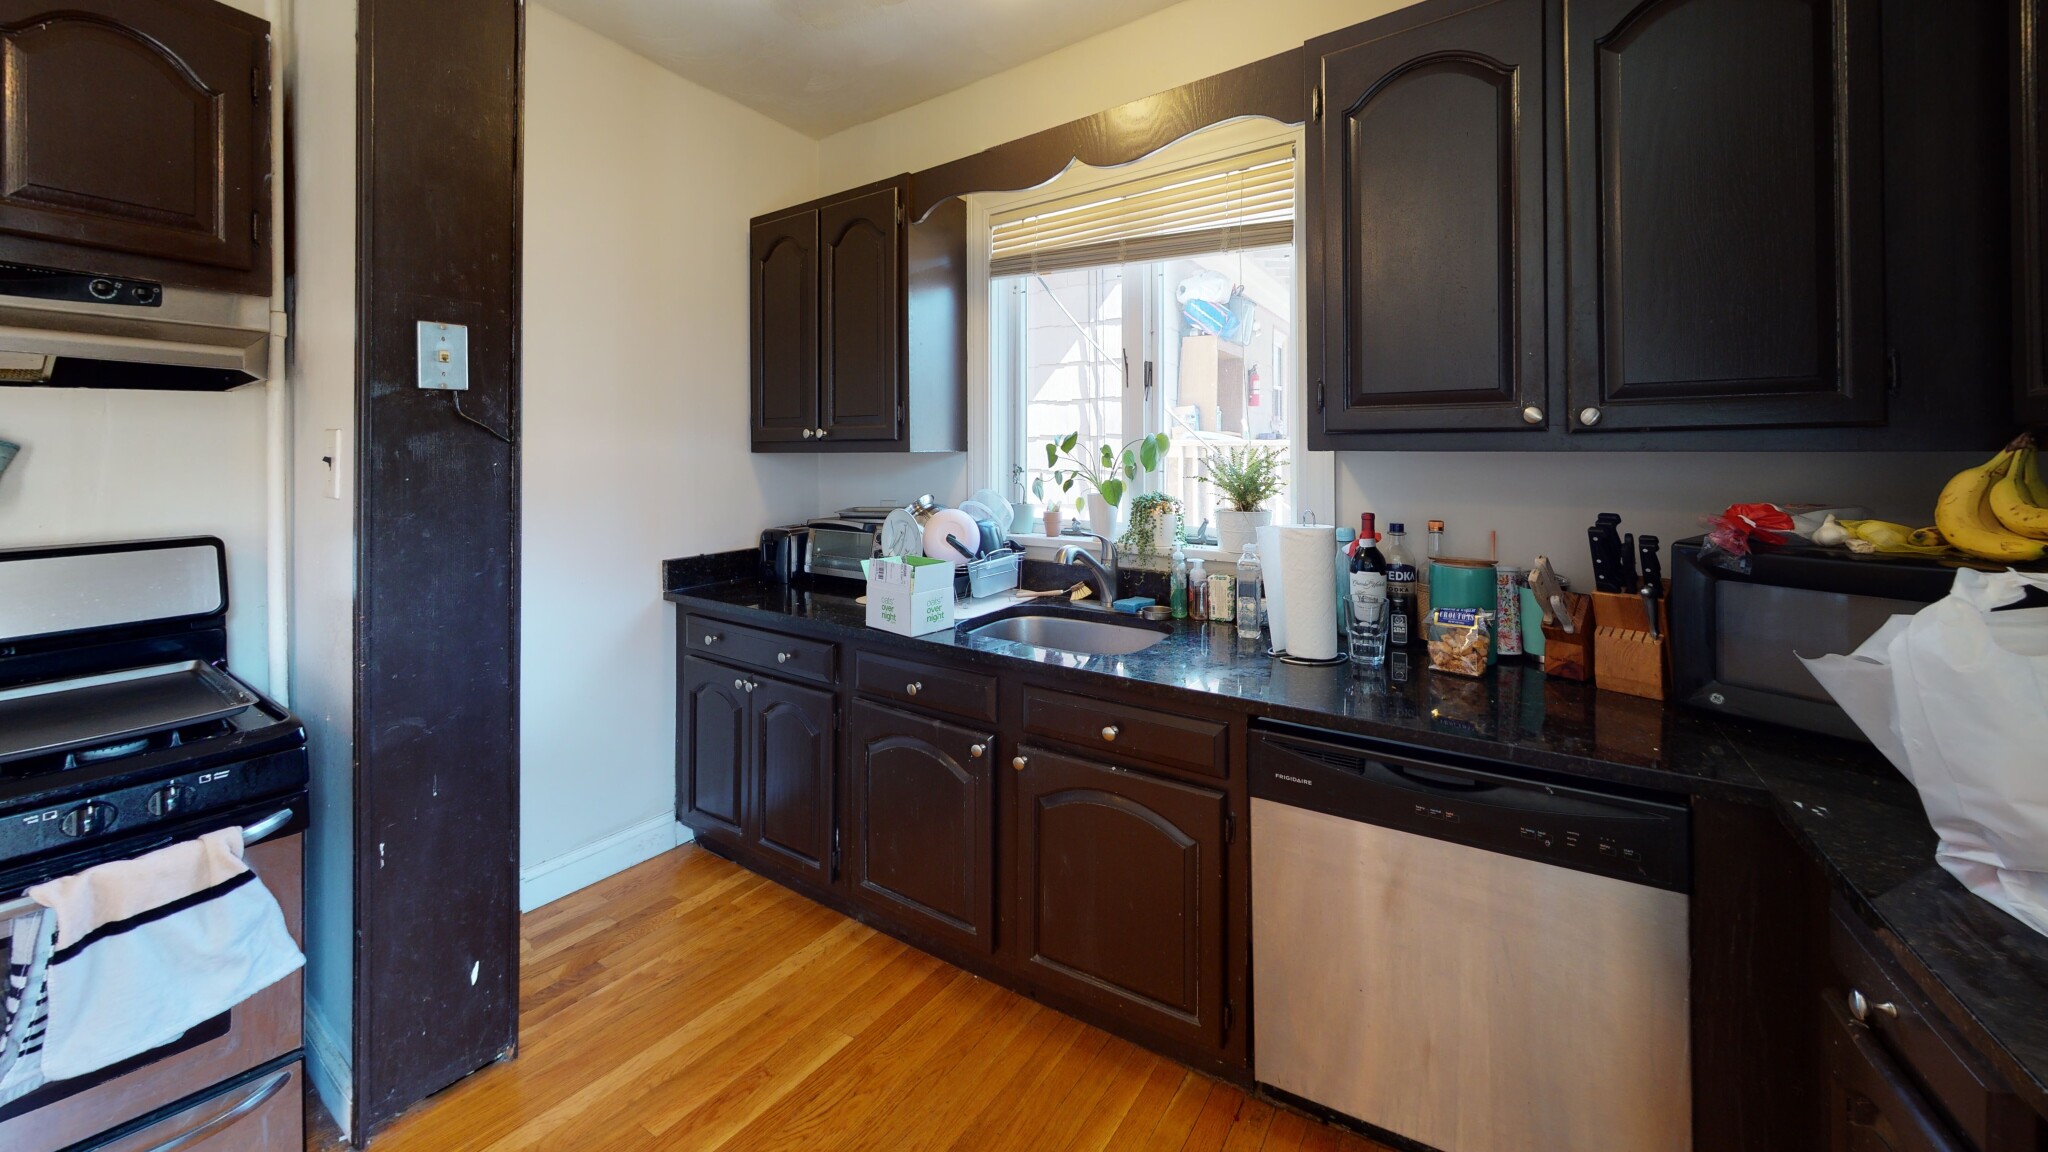 Photos of apartment on Bennington St.,Boston MA 02128